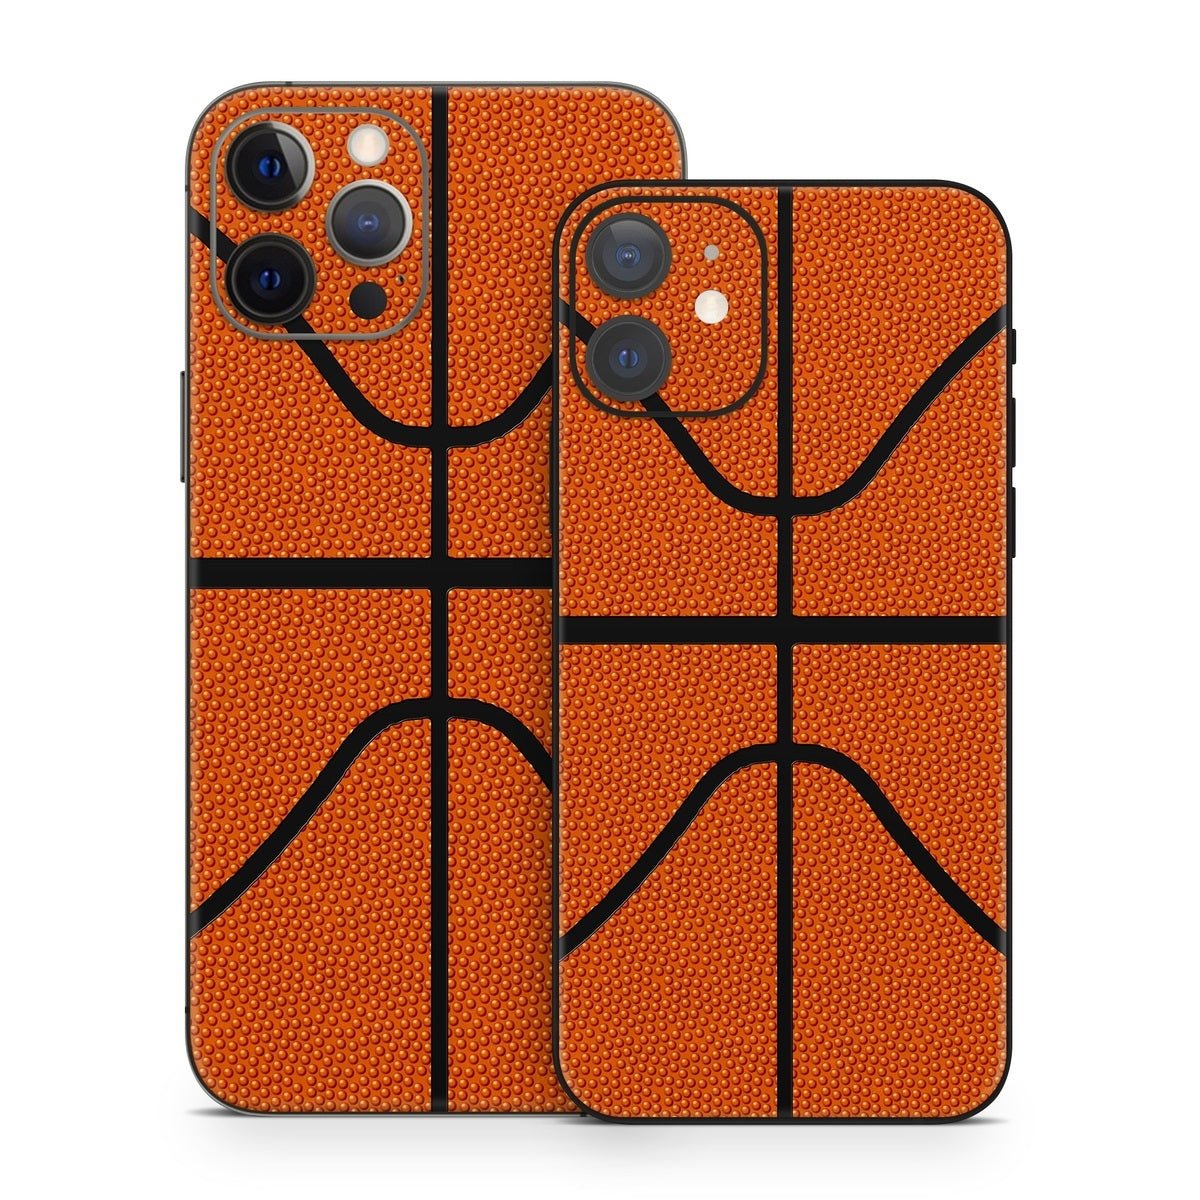 Basketball - Apple iPhone 12 Skin - Sports - DecalGirl